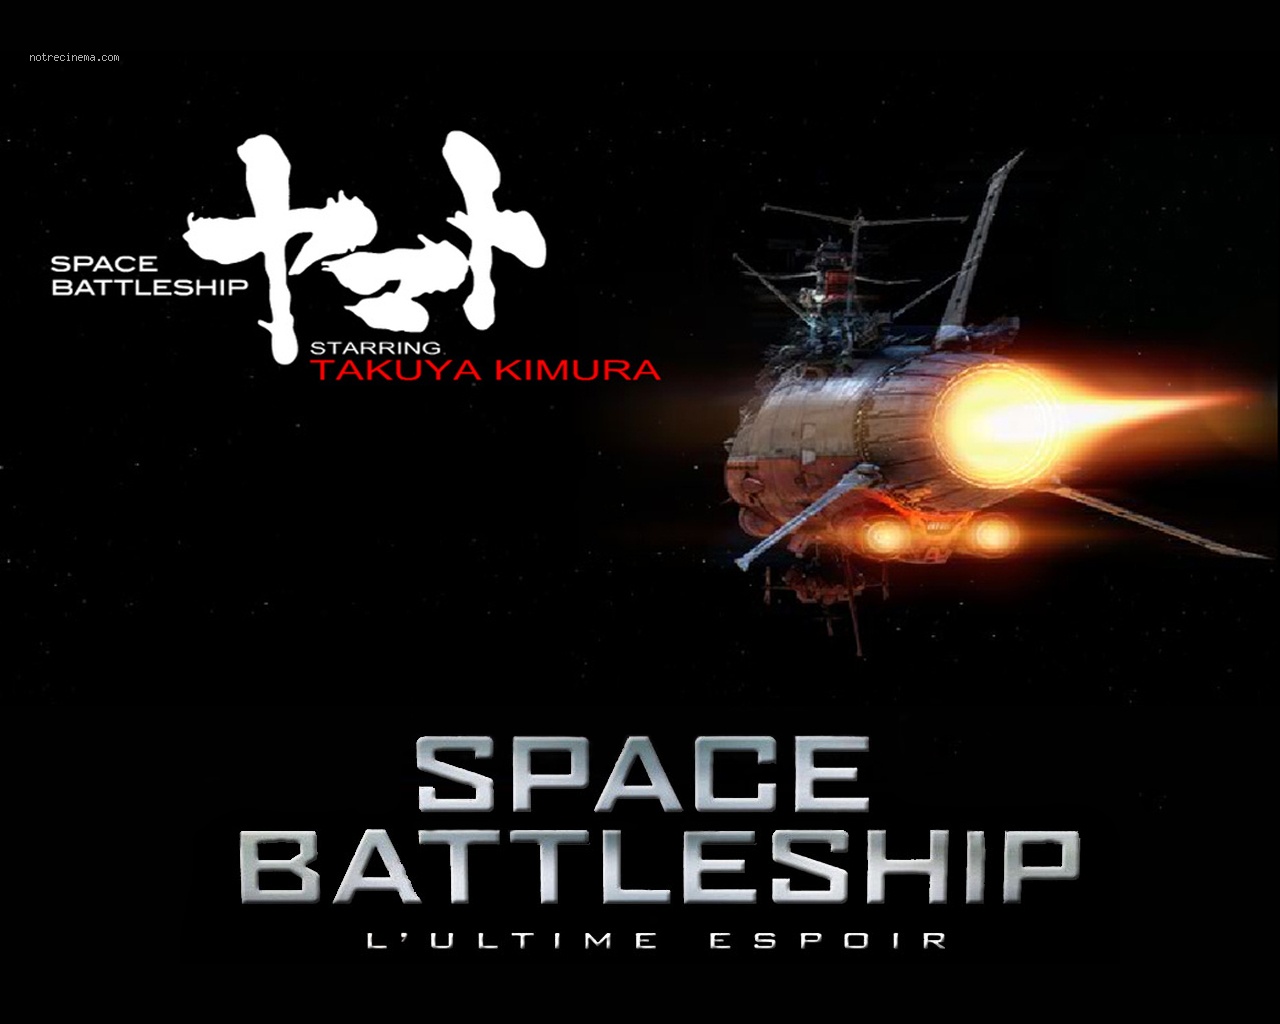 Space Battleship Yamato 2199 Wallpaper Space battleship lultime